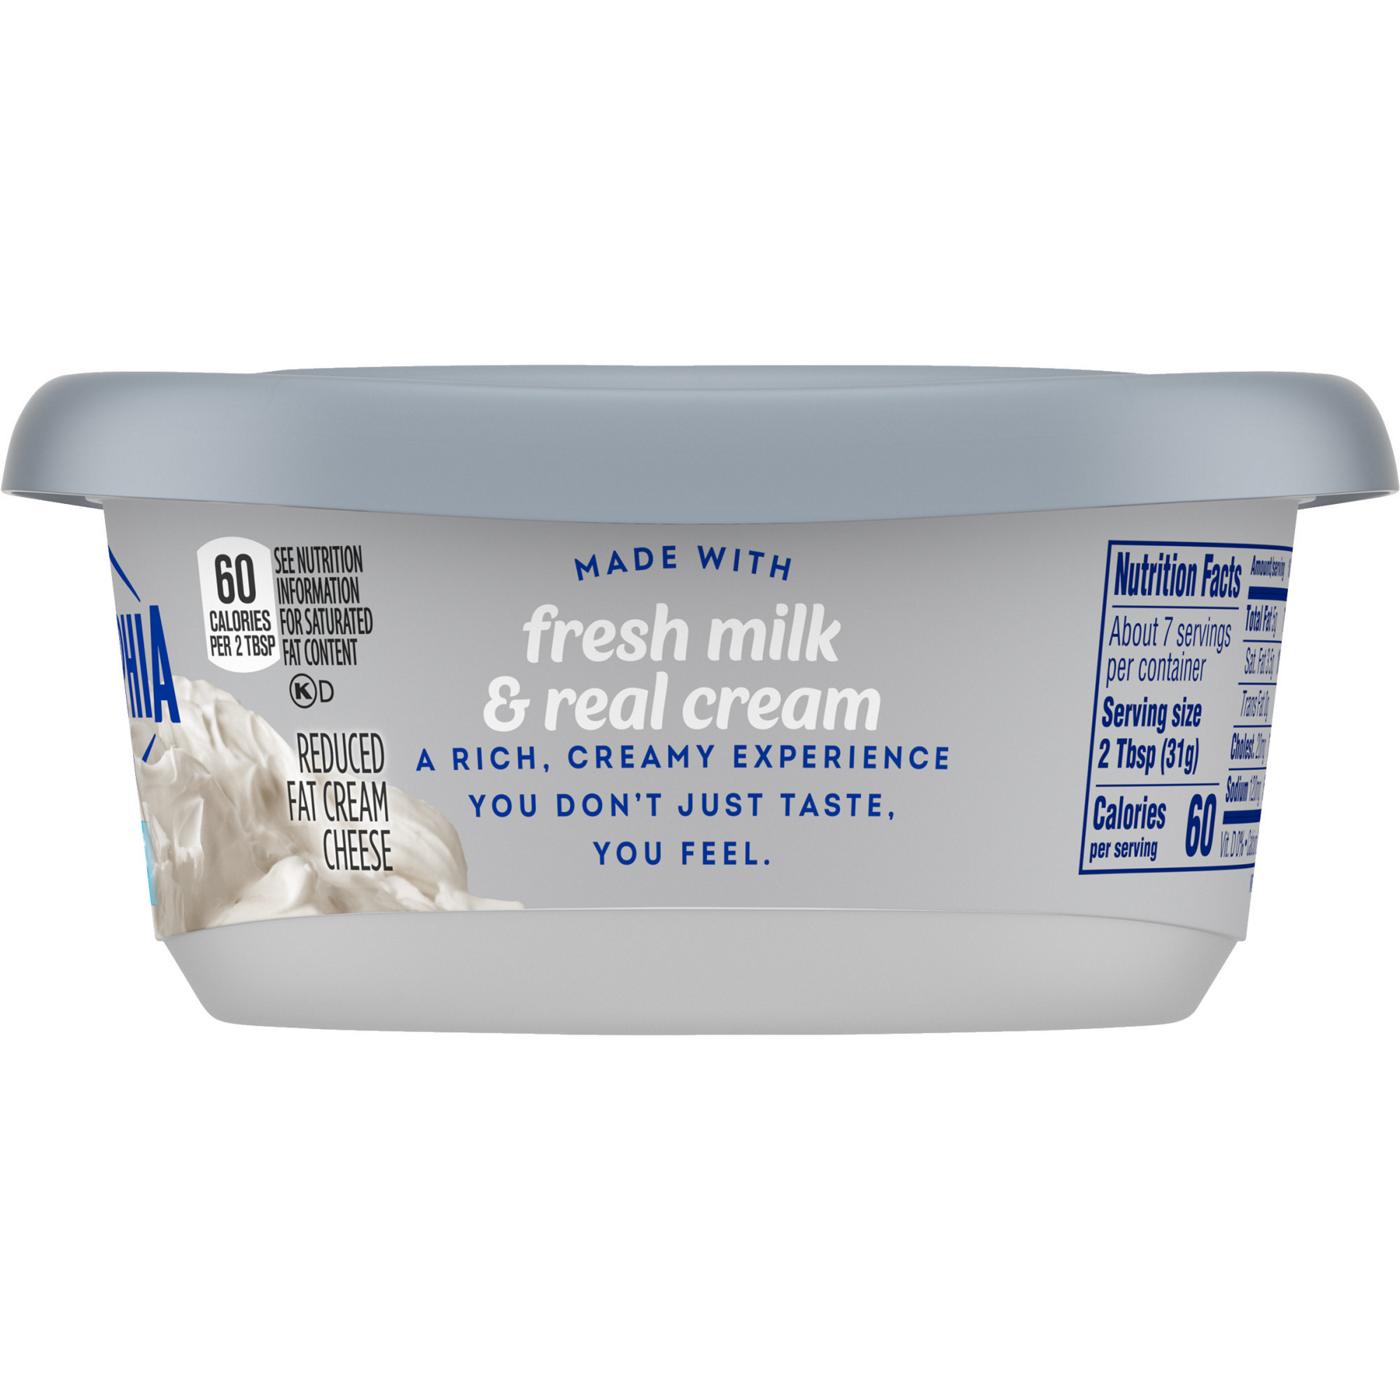 Philadelphia Reduced Fat Cream Cheese; image 2 of 3